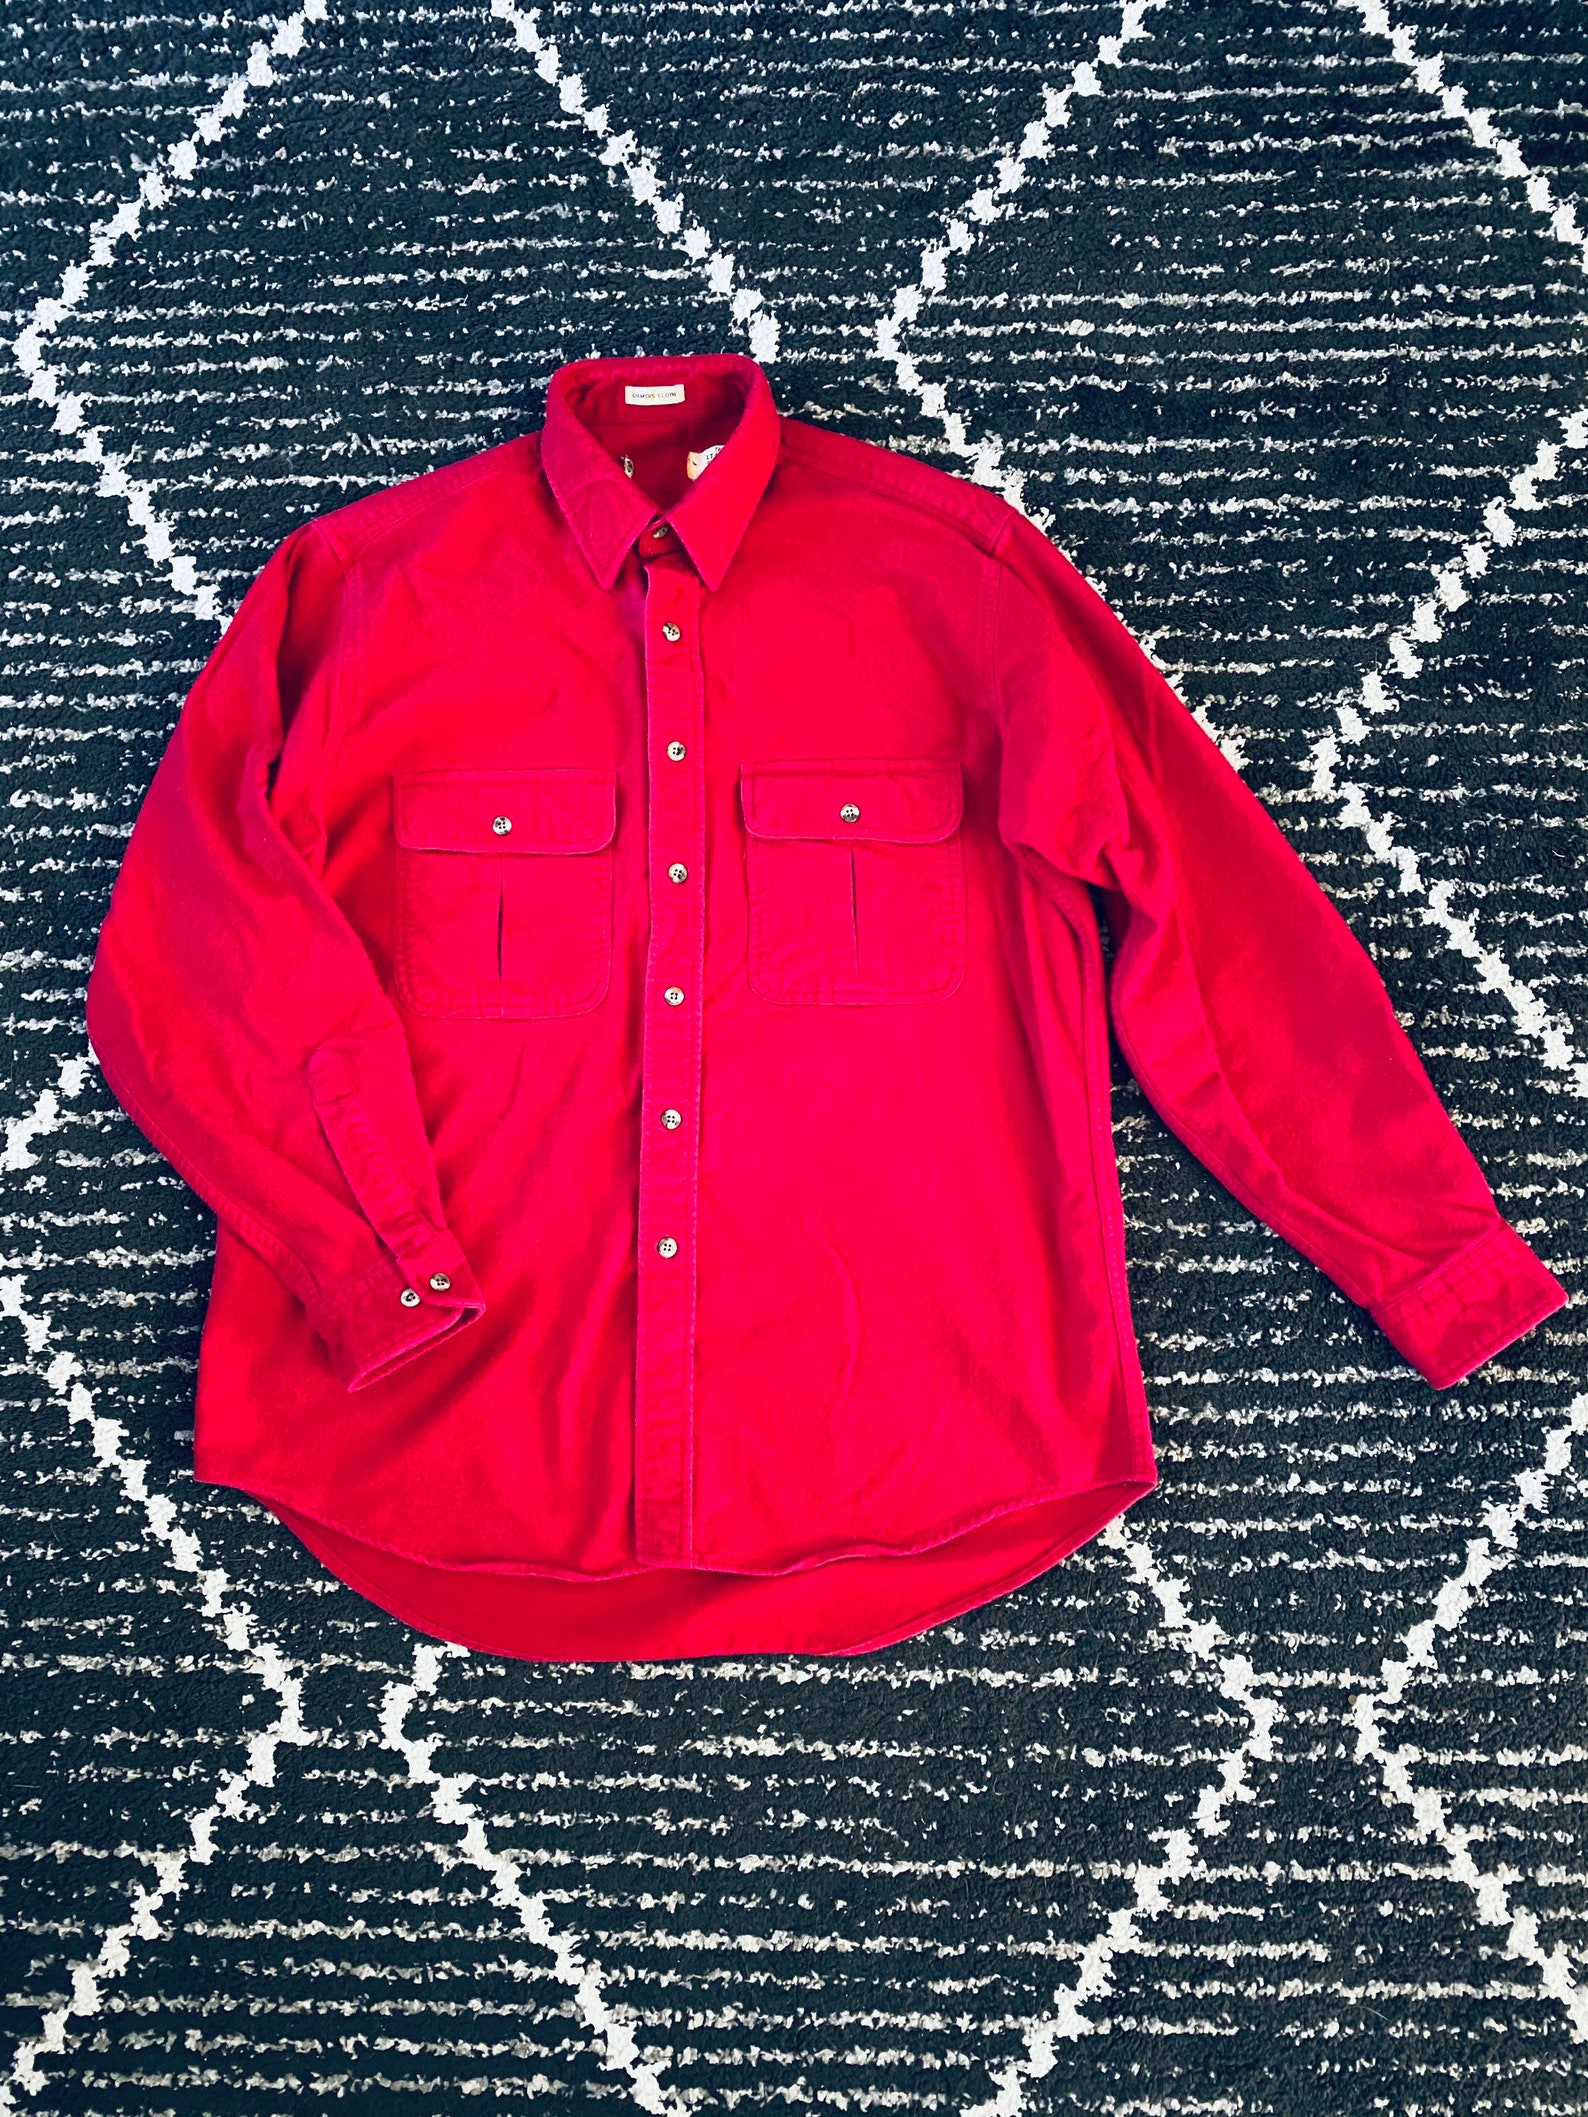 Cozy vintage chamois flannel shirt/jacket | Etsy